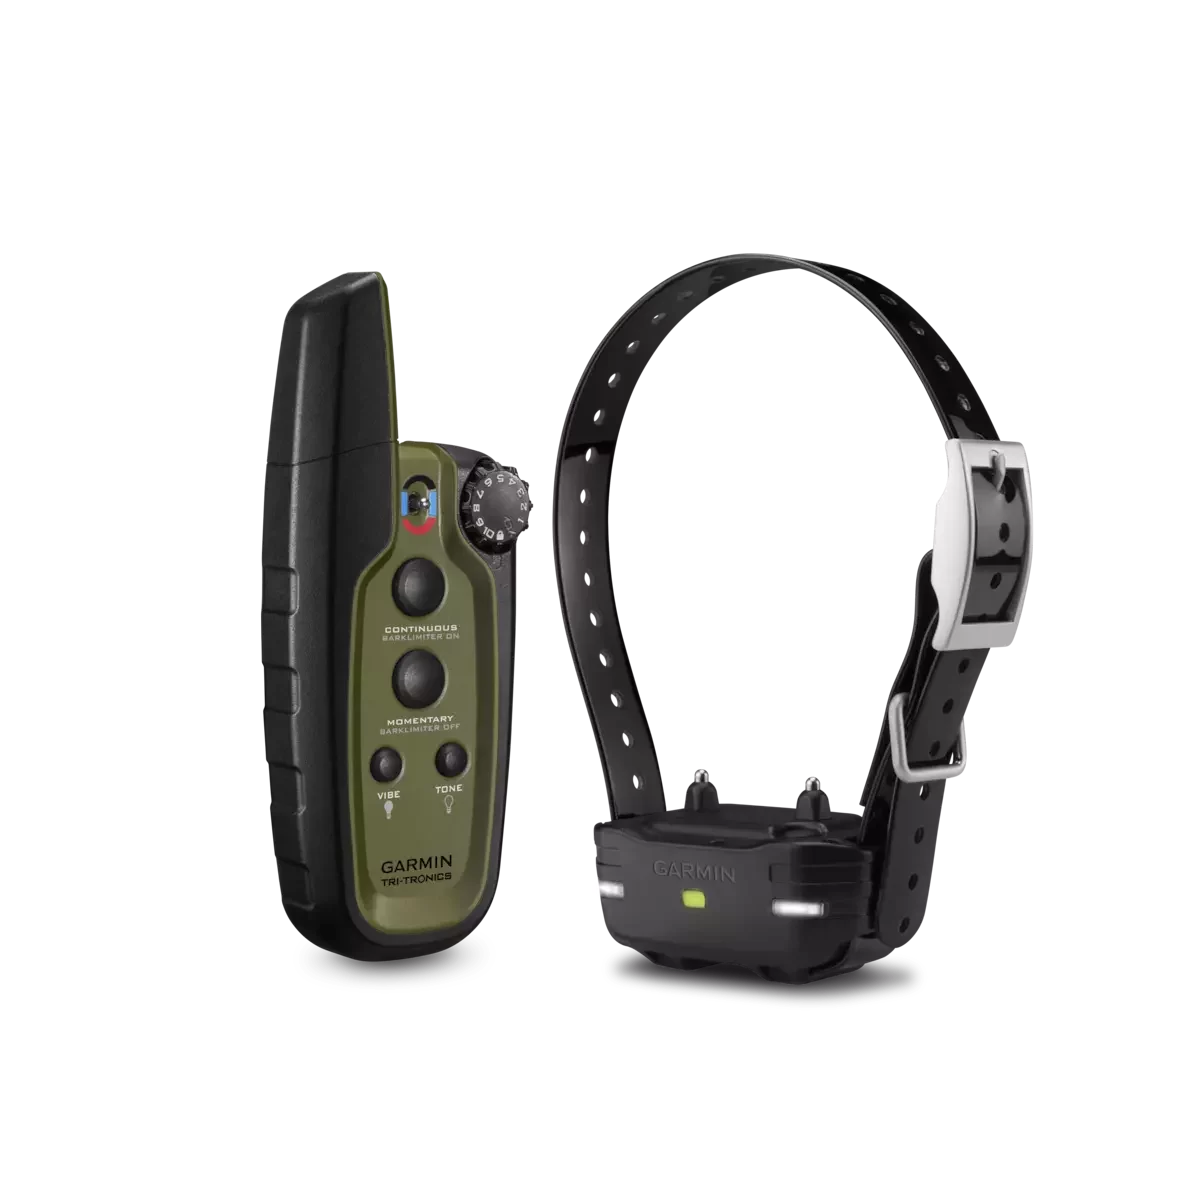 Garmin Sport PRO dog training collar and handheld remote bundle